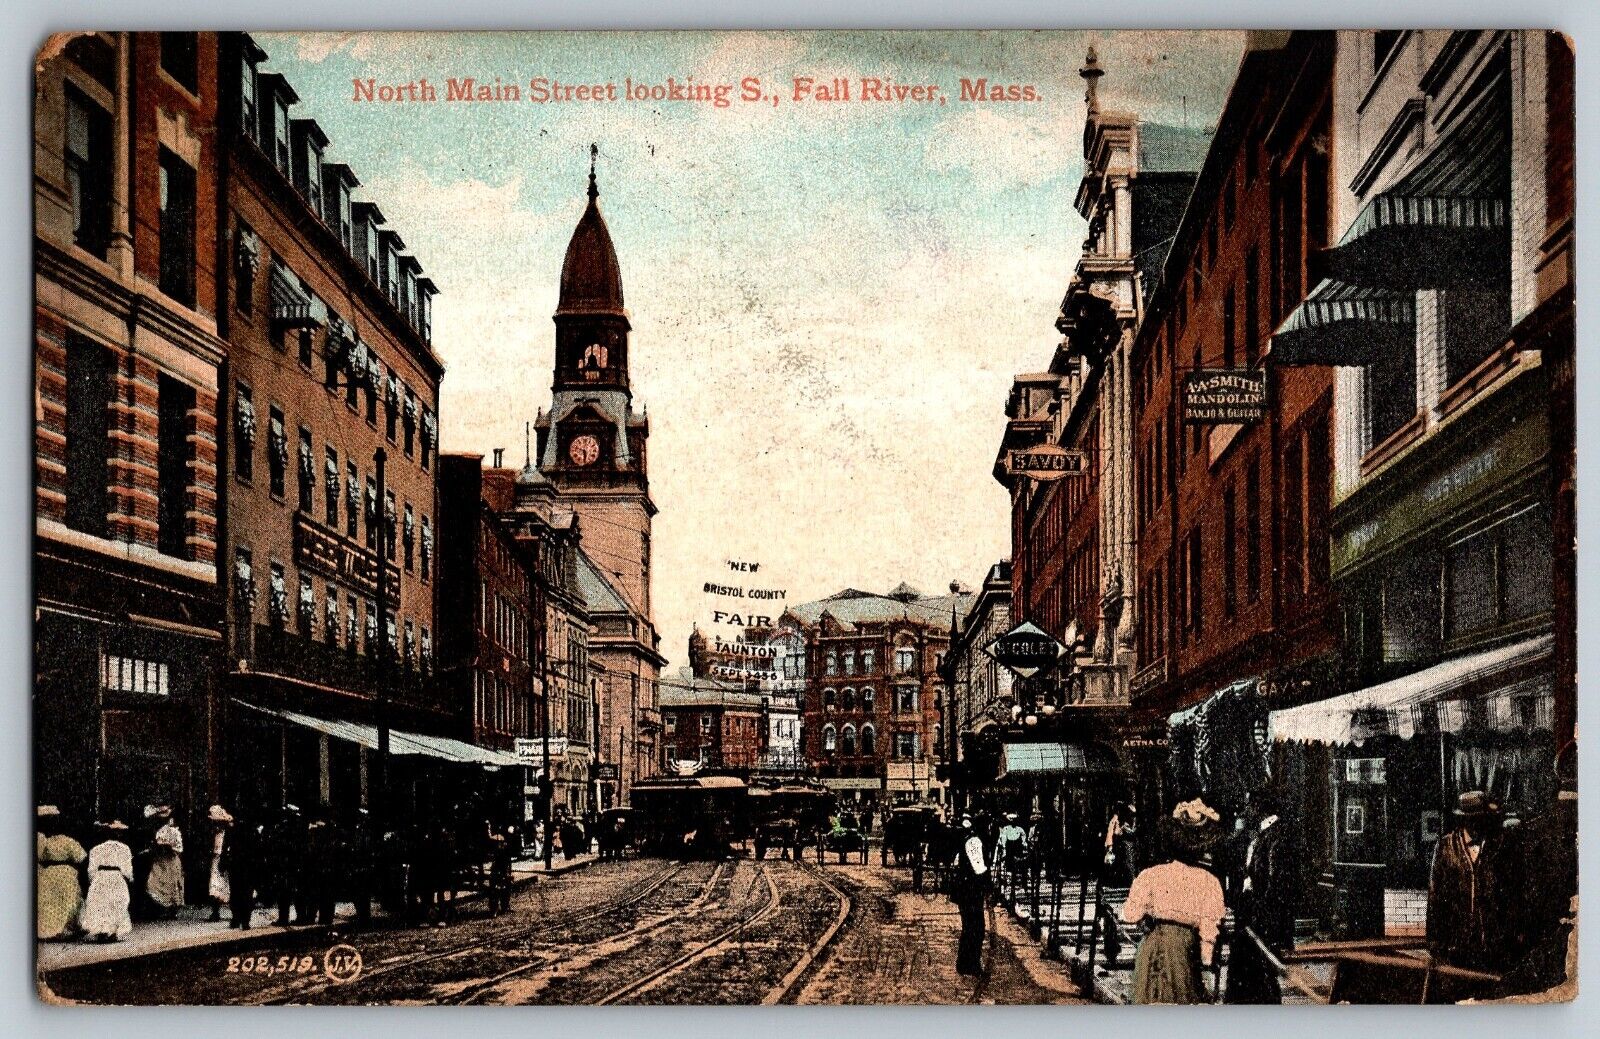 Fall River, Massachusetts - Church & Boys Club Main St. Scene - Vintage Postcard